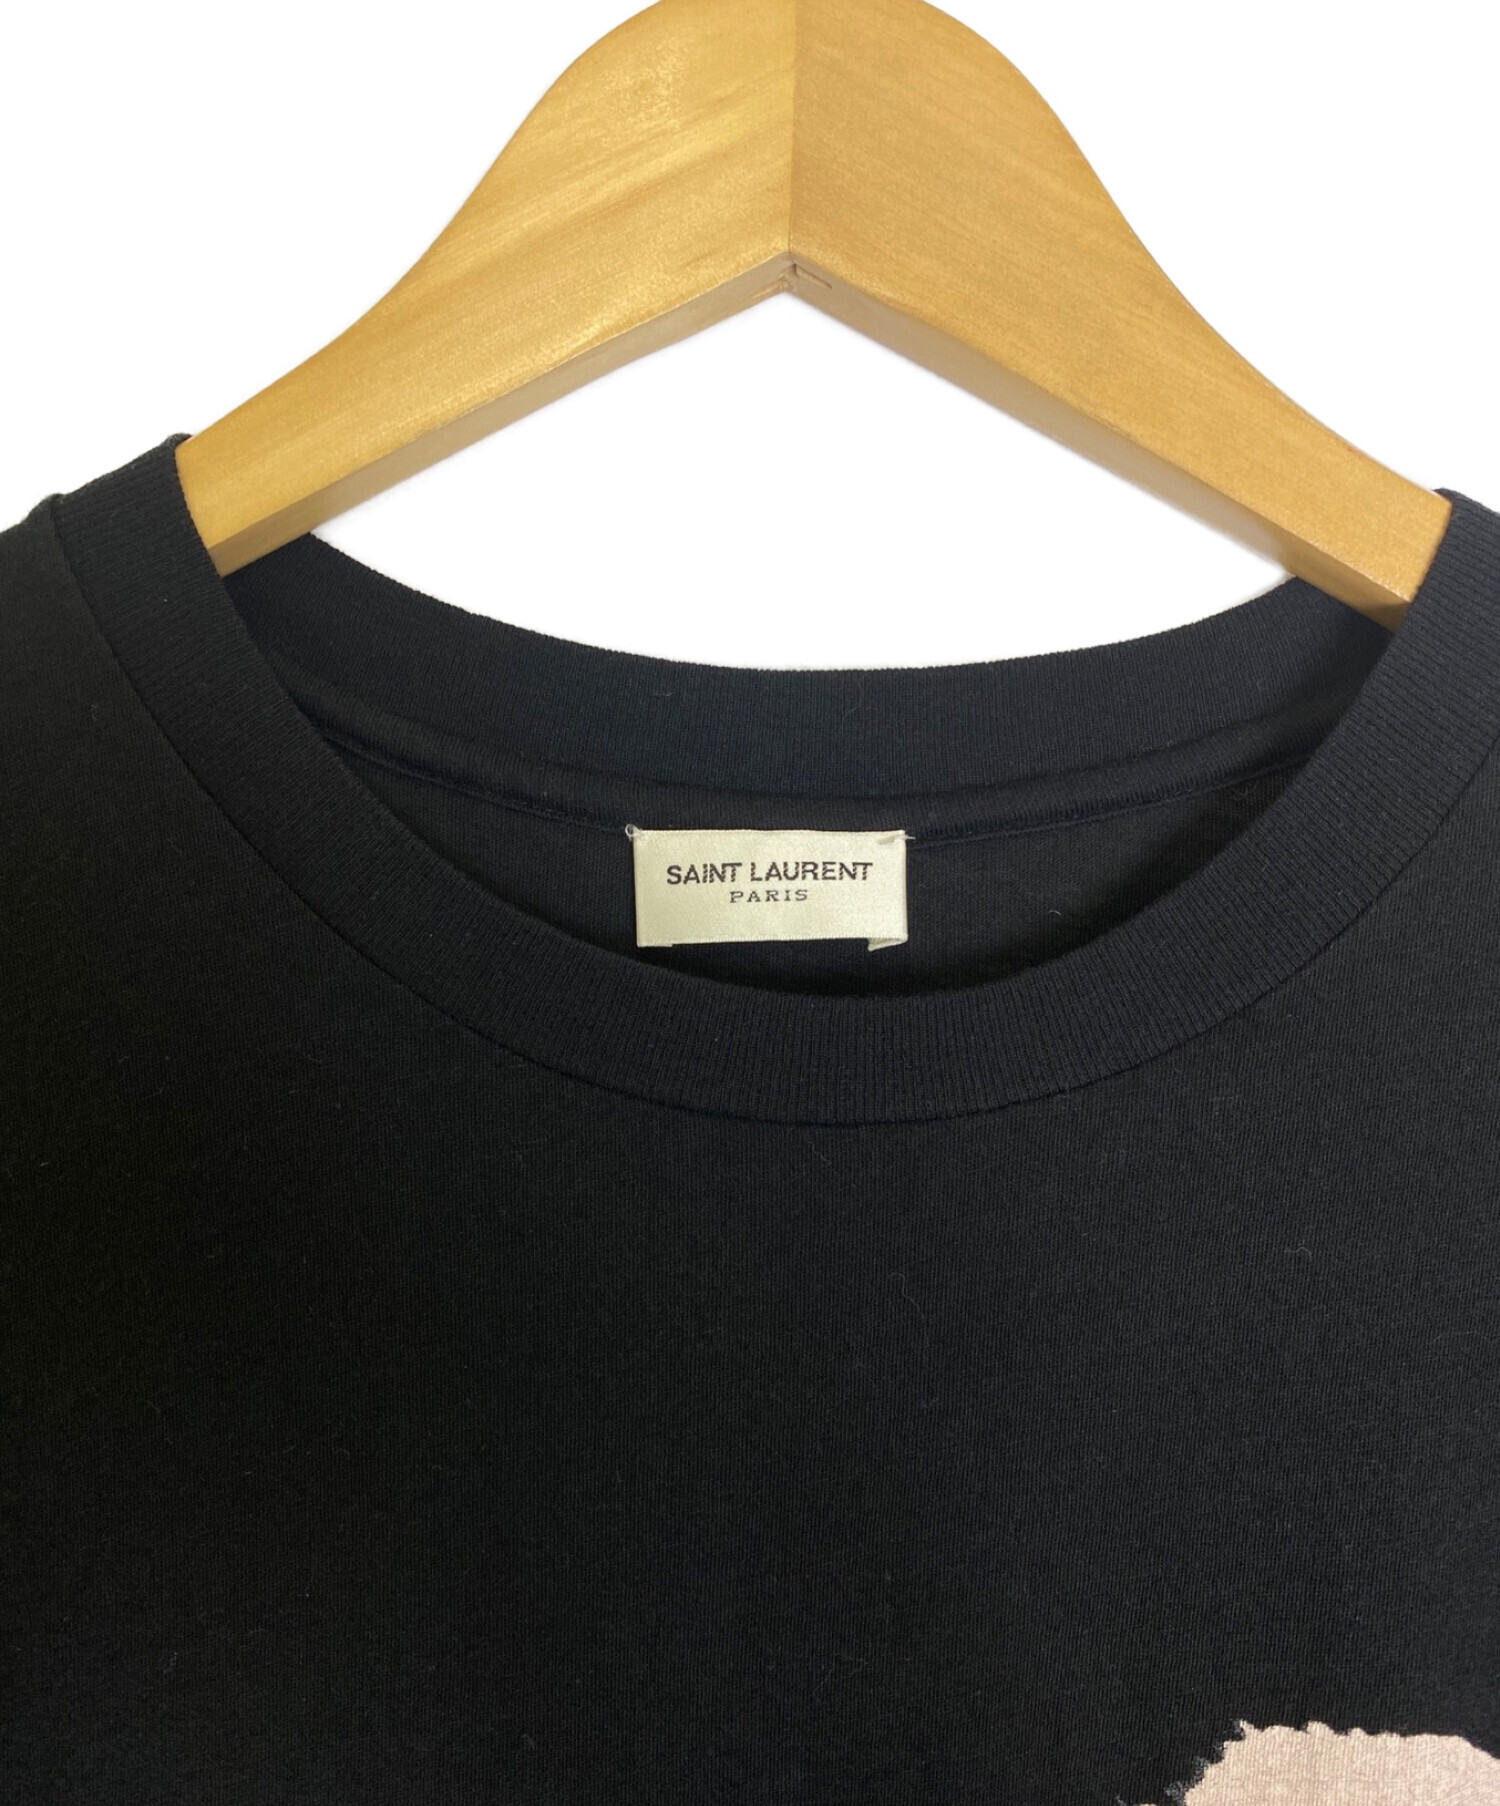 Saint Laurent Paris (サンローランパリ) Tシャツ ブラック サイズ:XS